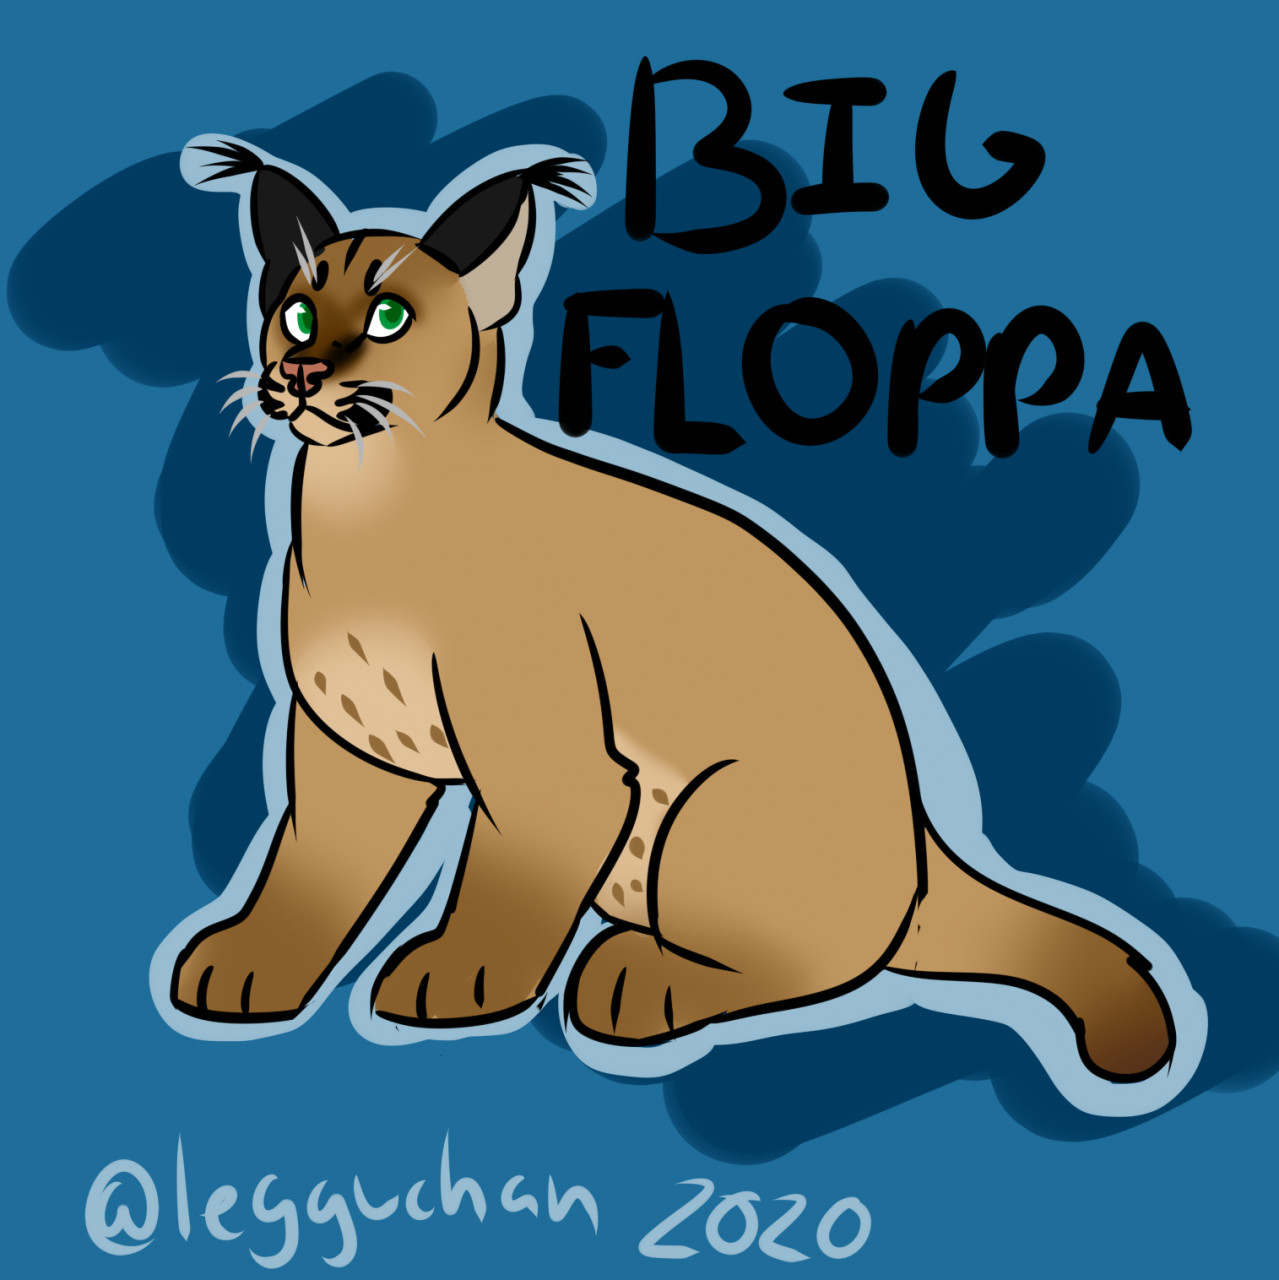 Floppa in 2022. Cat memes, Funny cat, Caracal cat, Big Floppa, HD